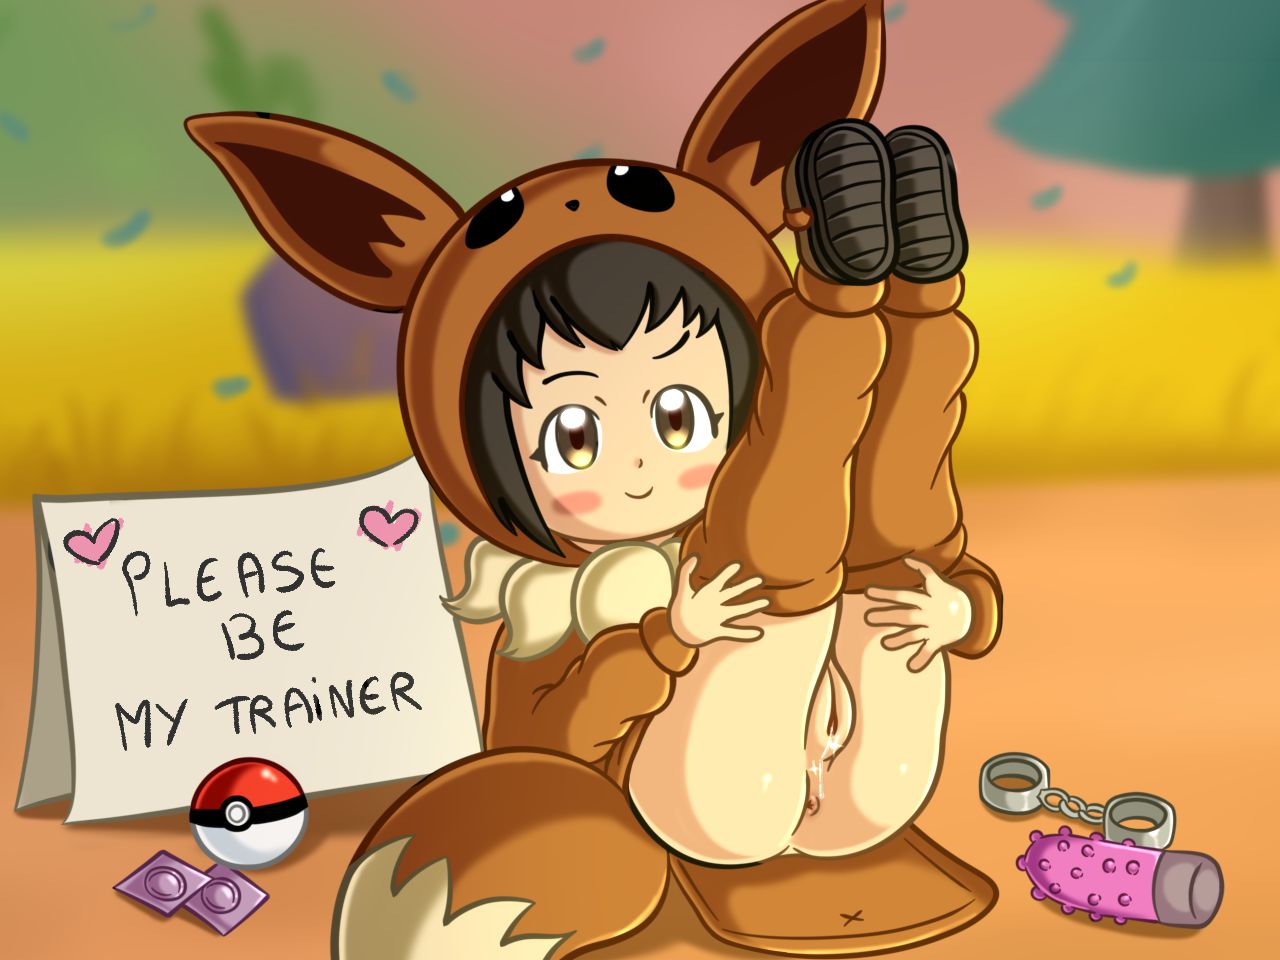 [Pokemon Play-chan] Ebui Cosplay Cute Lori Trainer Pokemon Go-chan Erotic Image of Pokemon Sword Shield 31